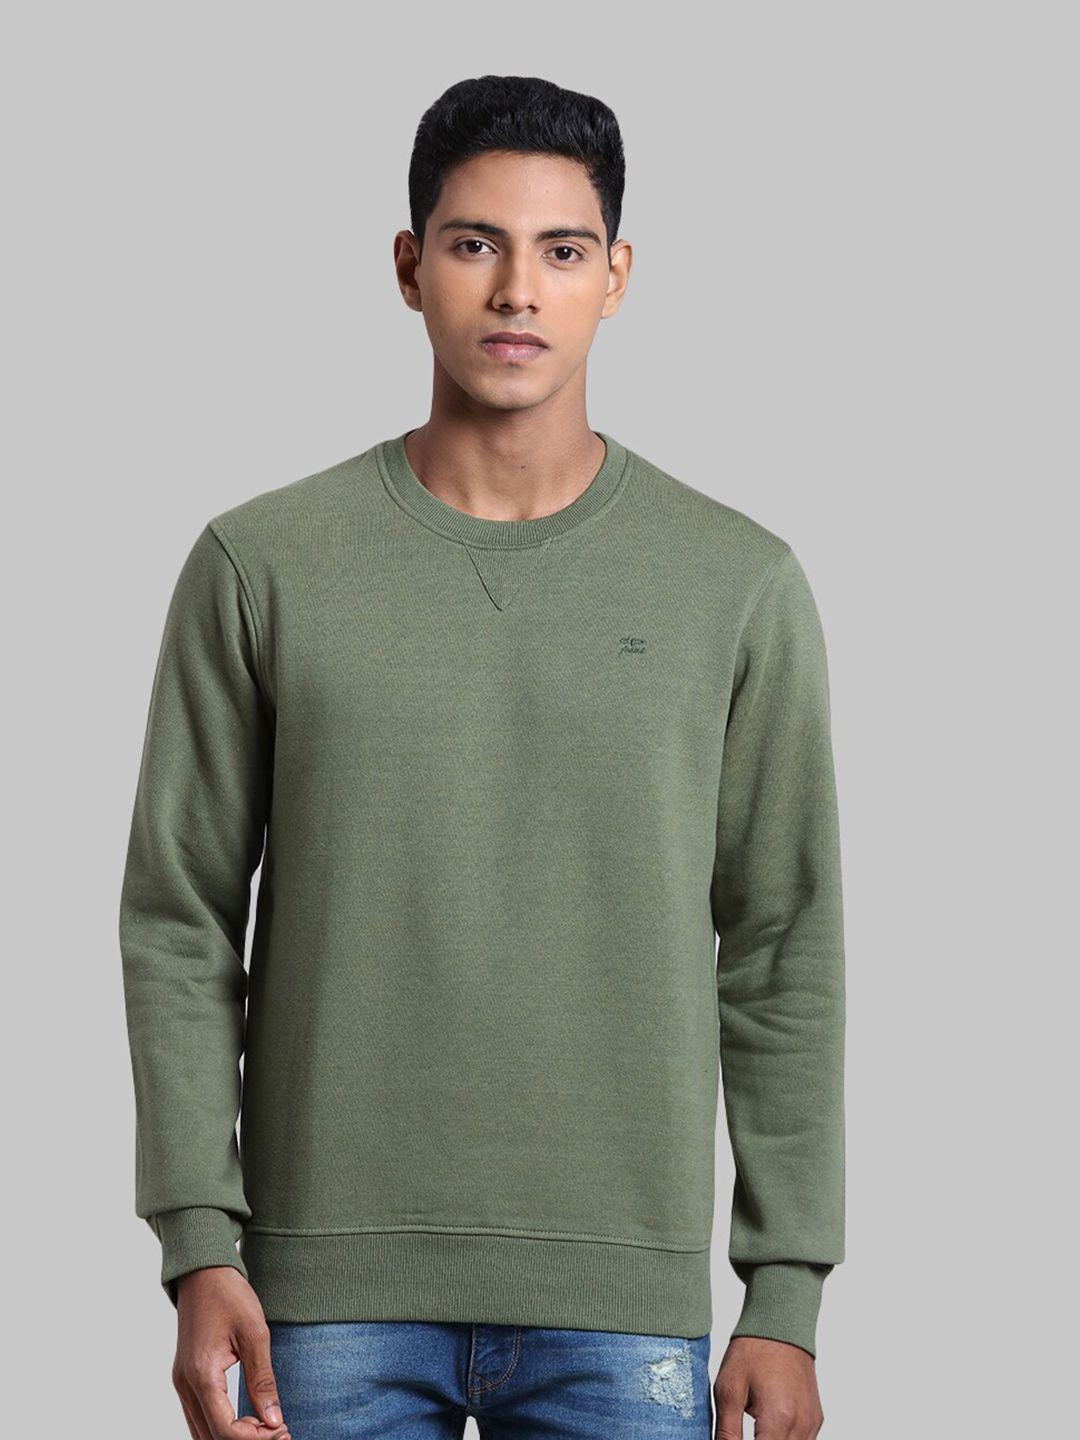 colorplus-men-green-cotton-sweatshirt